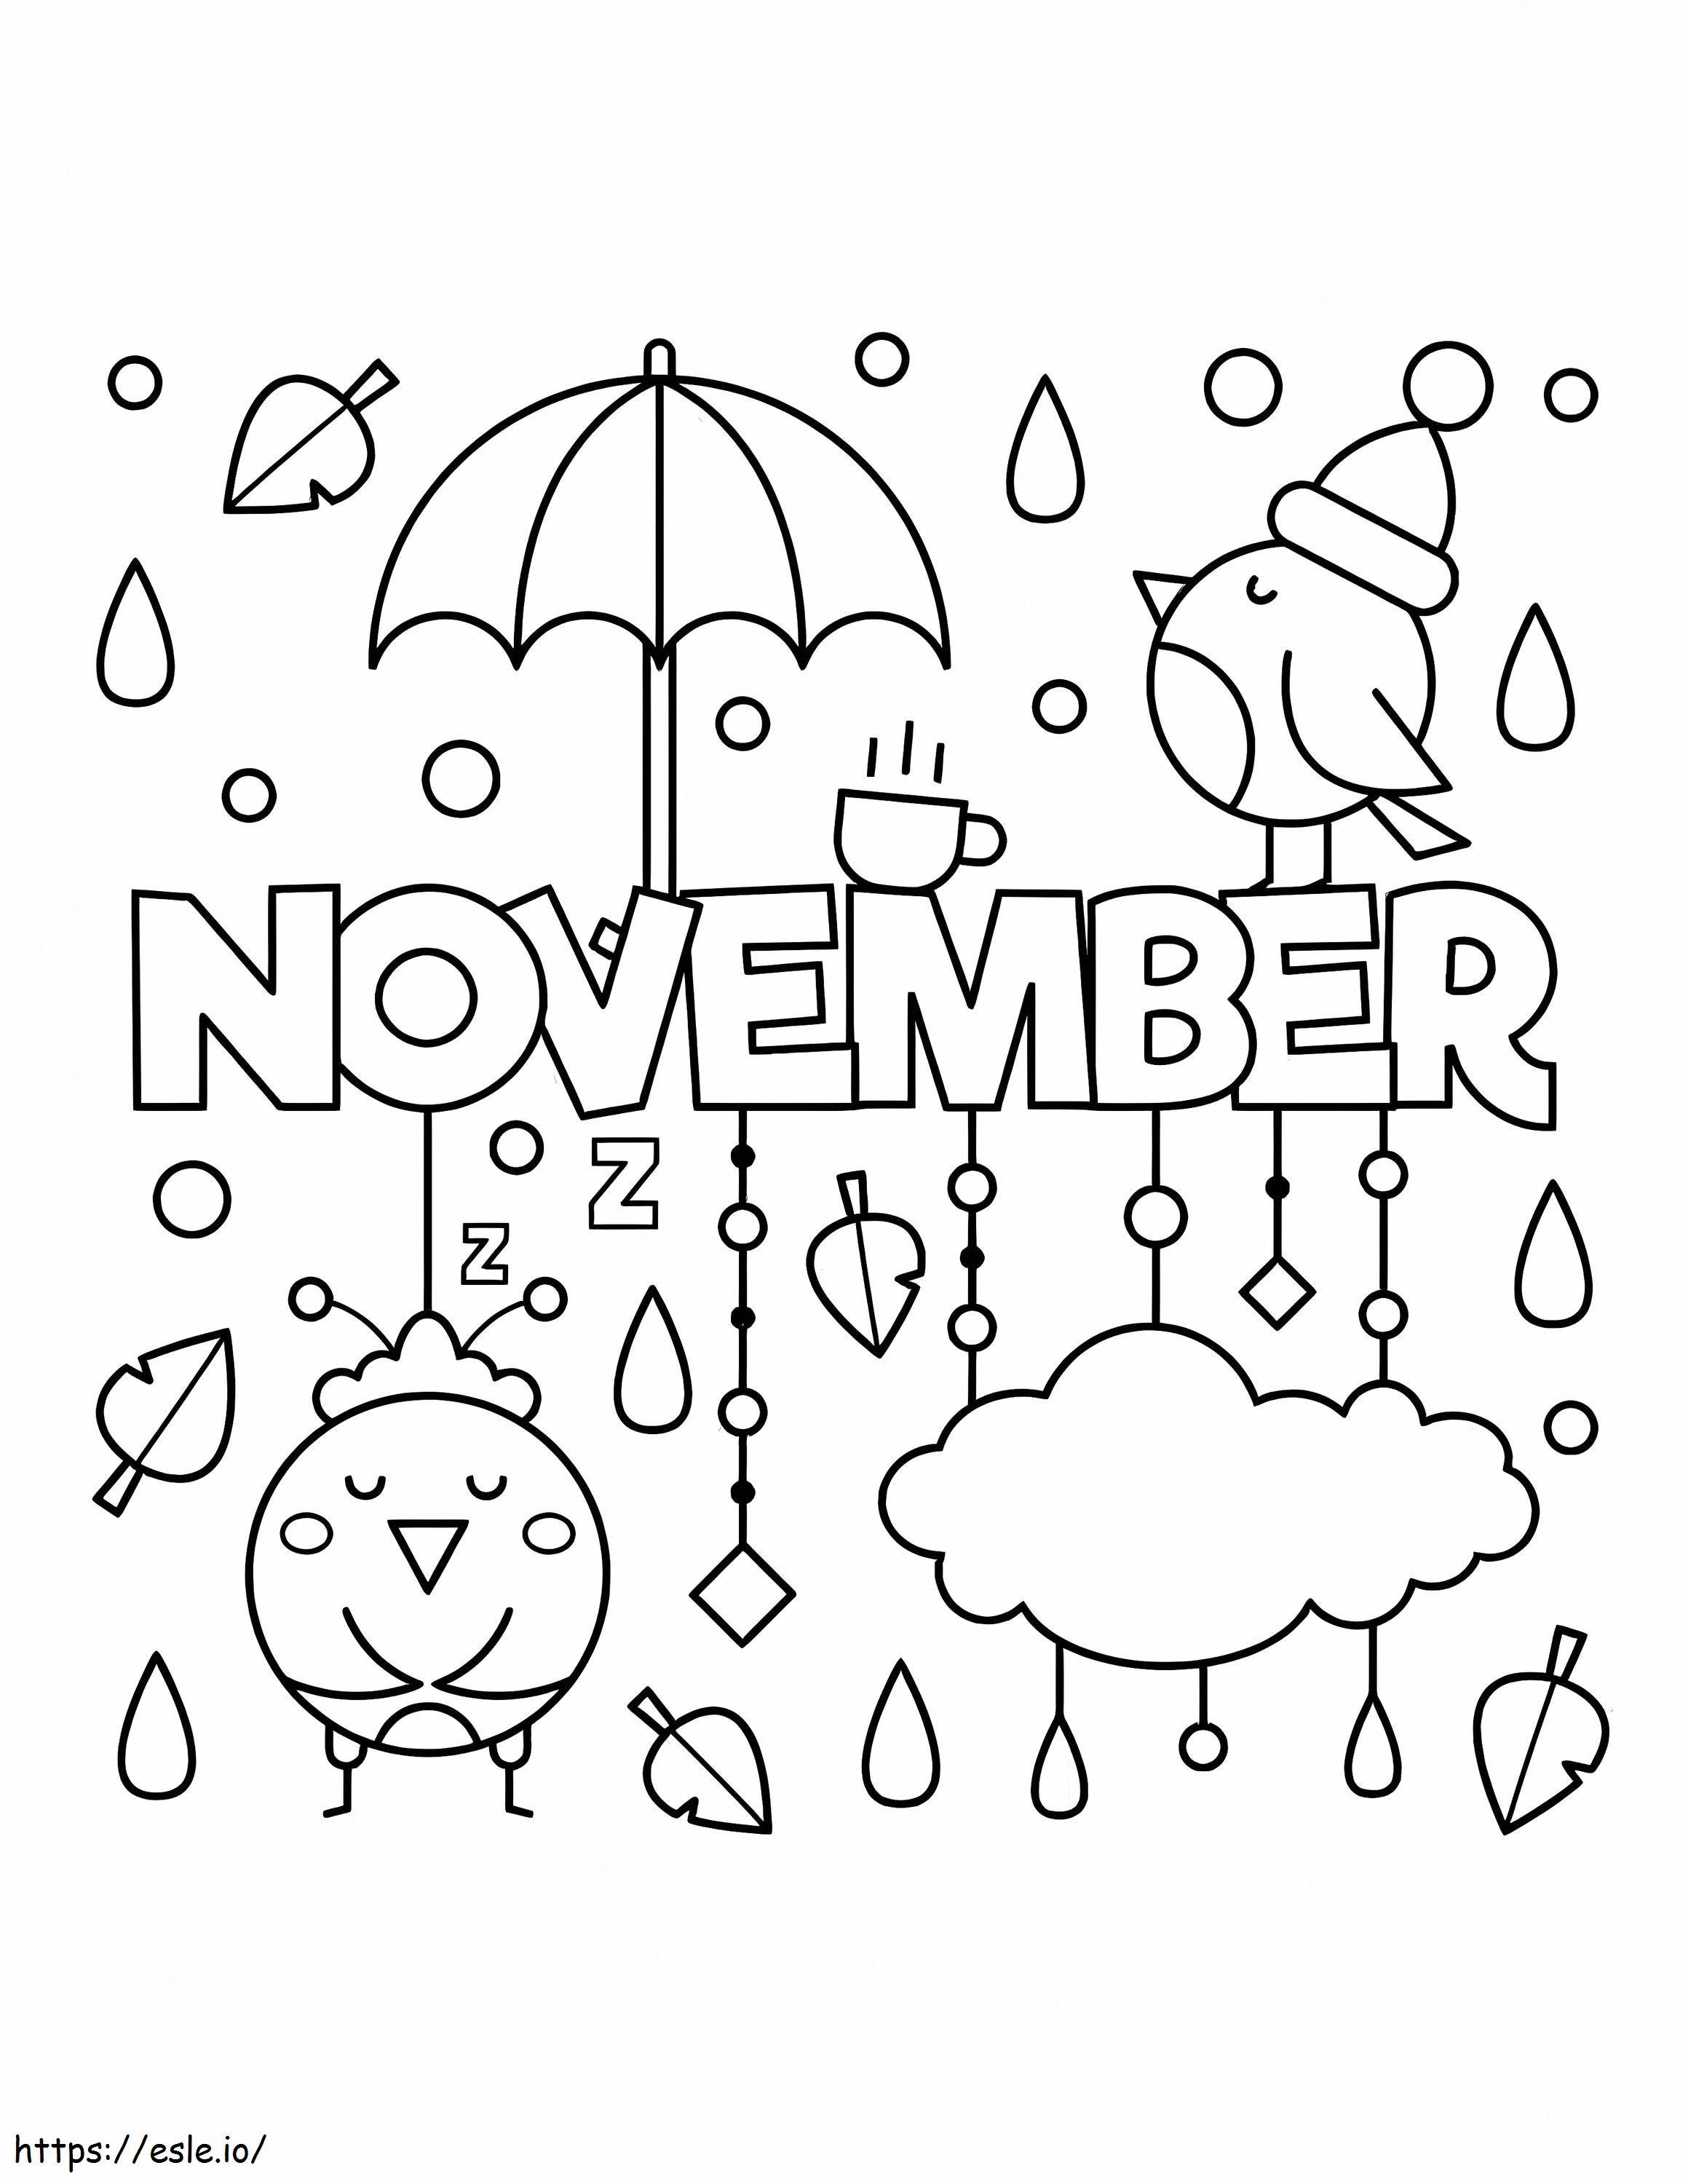 novembro com chuva para colorir